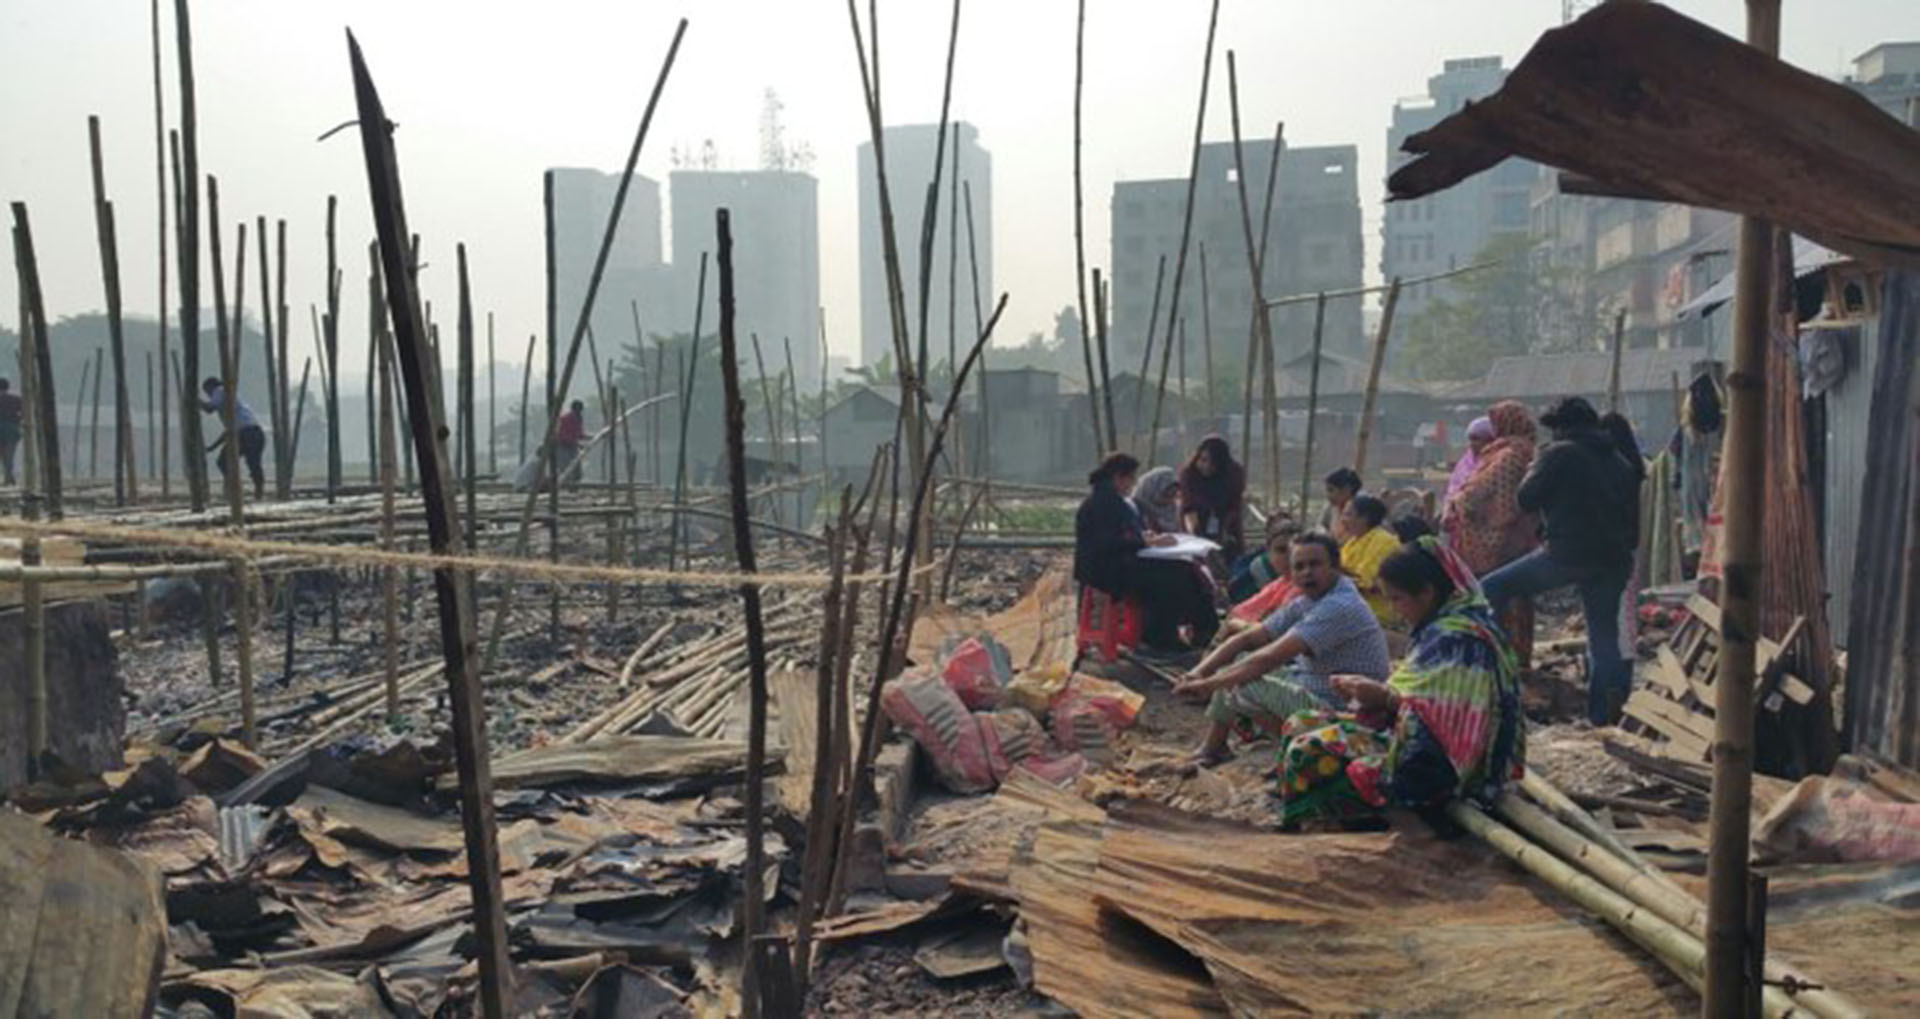 <p>Saat-tola slum after the devastating fire</p>